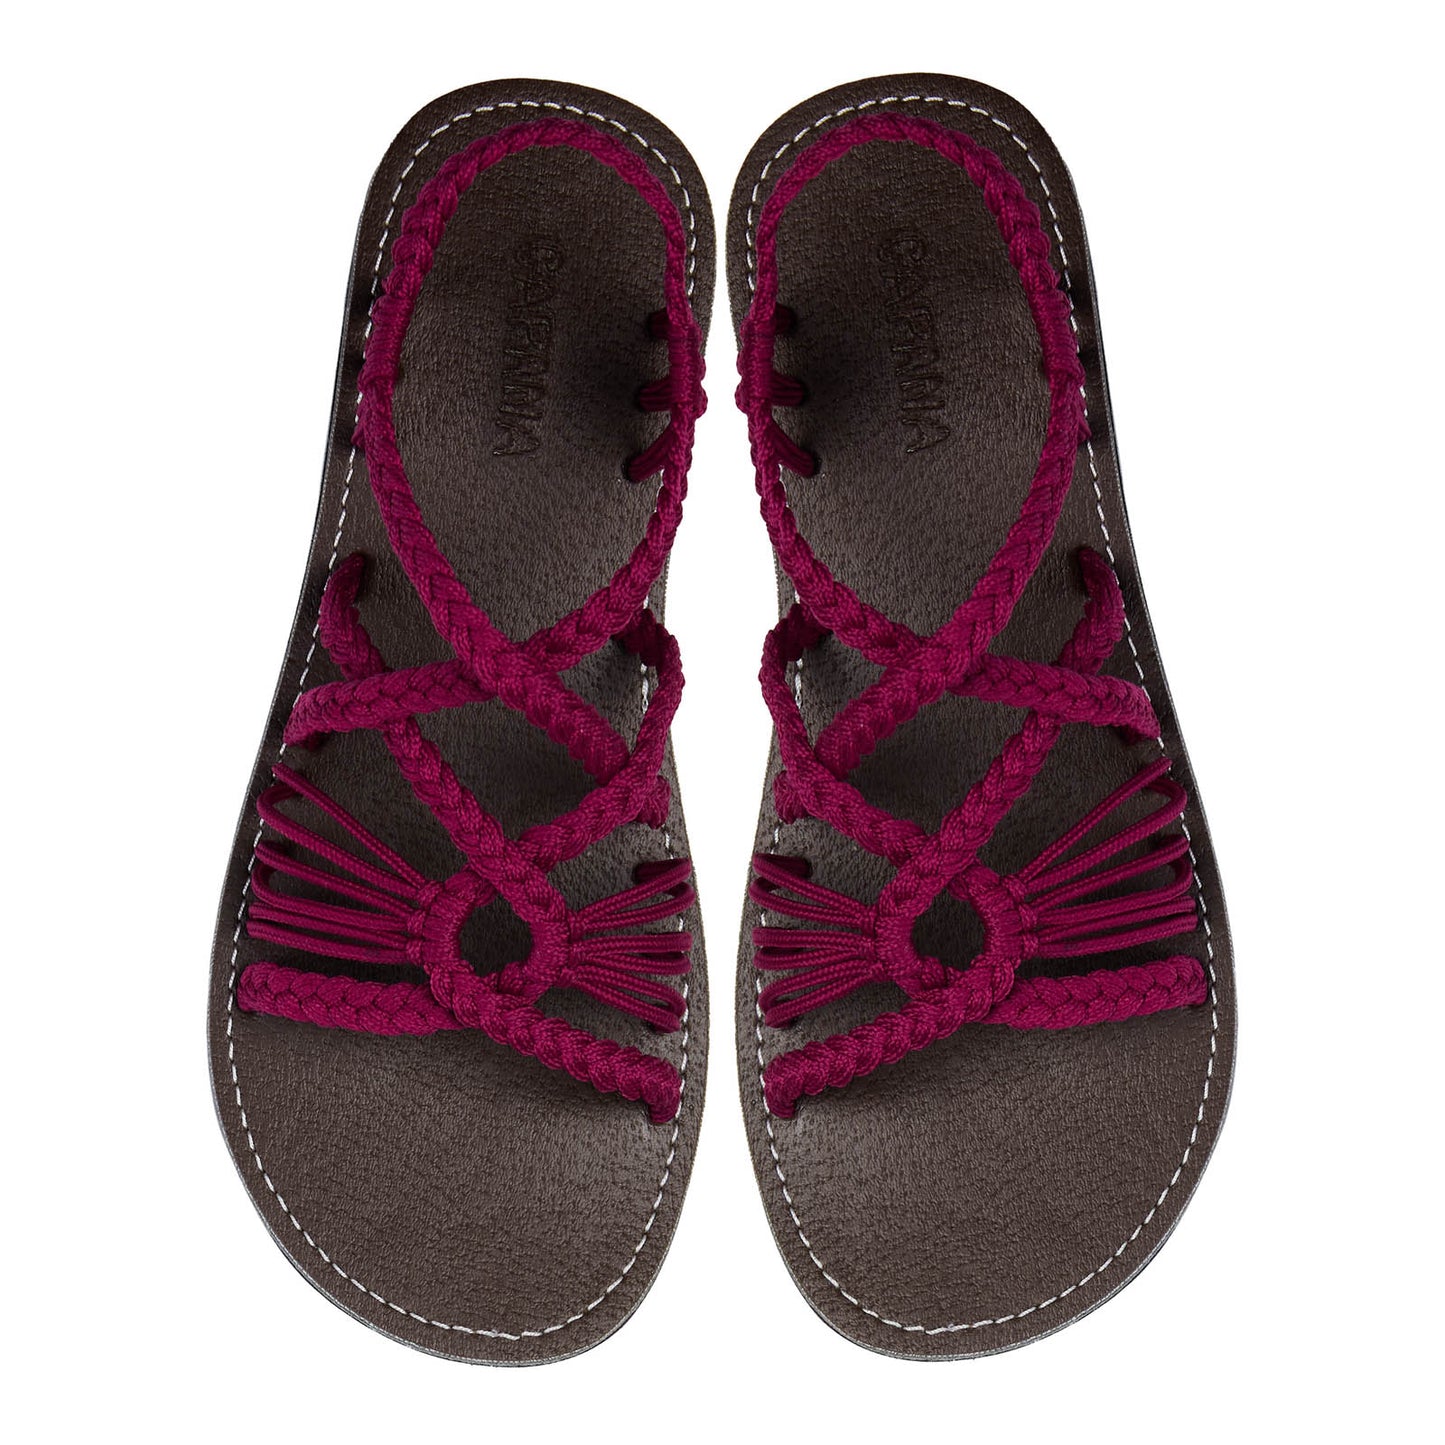 Relax Burgundy Rope Sandals Ruby Open toe wider design Flat Handmade sandals for women